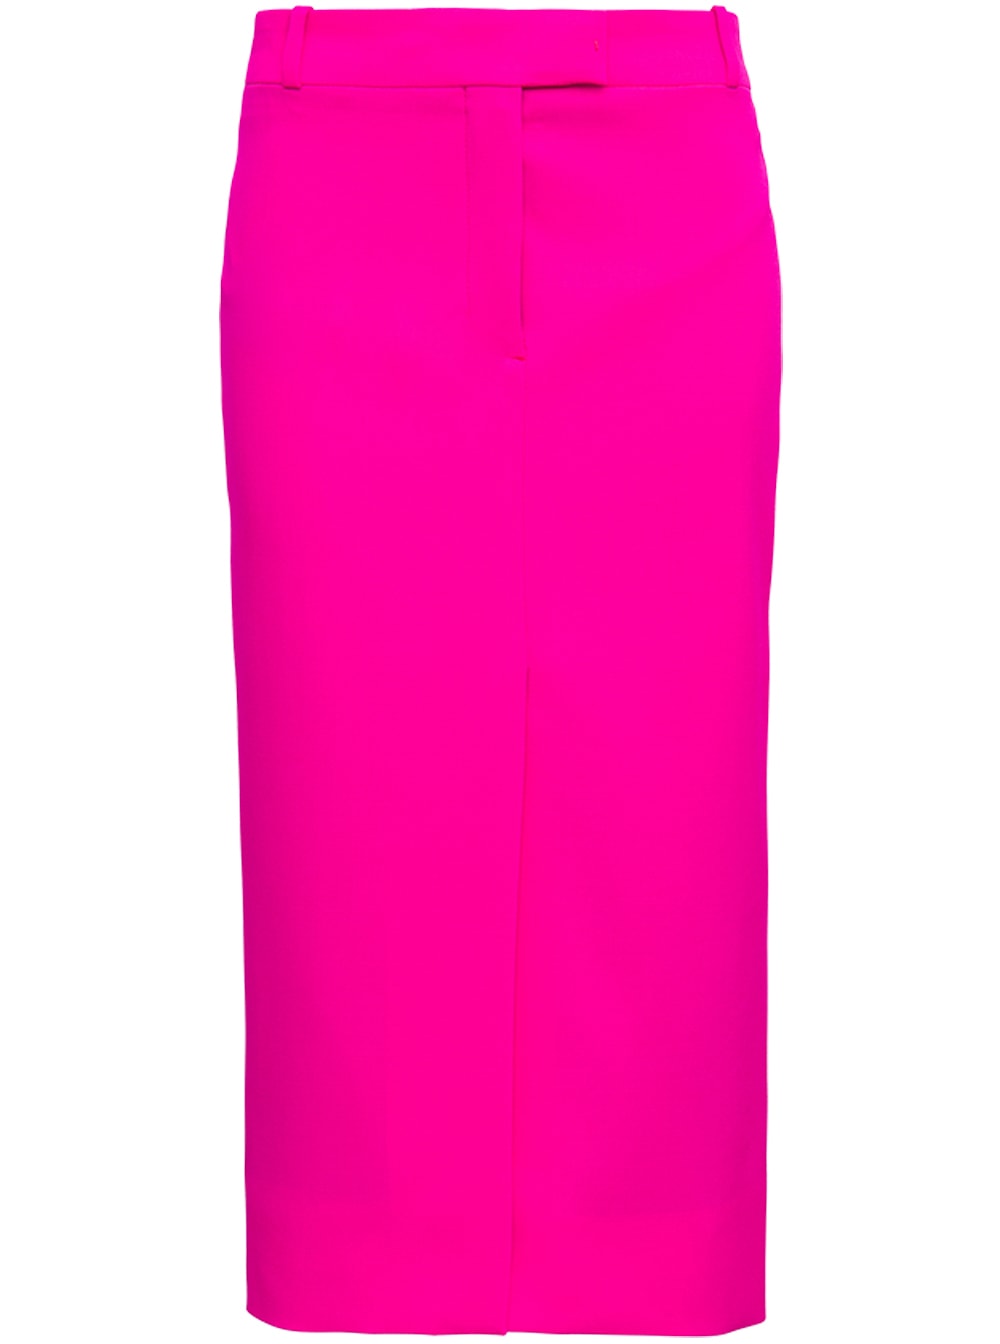 The Attico Pink Wool Blend Skirt